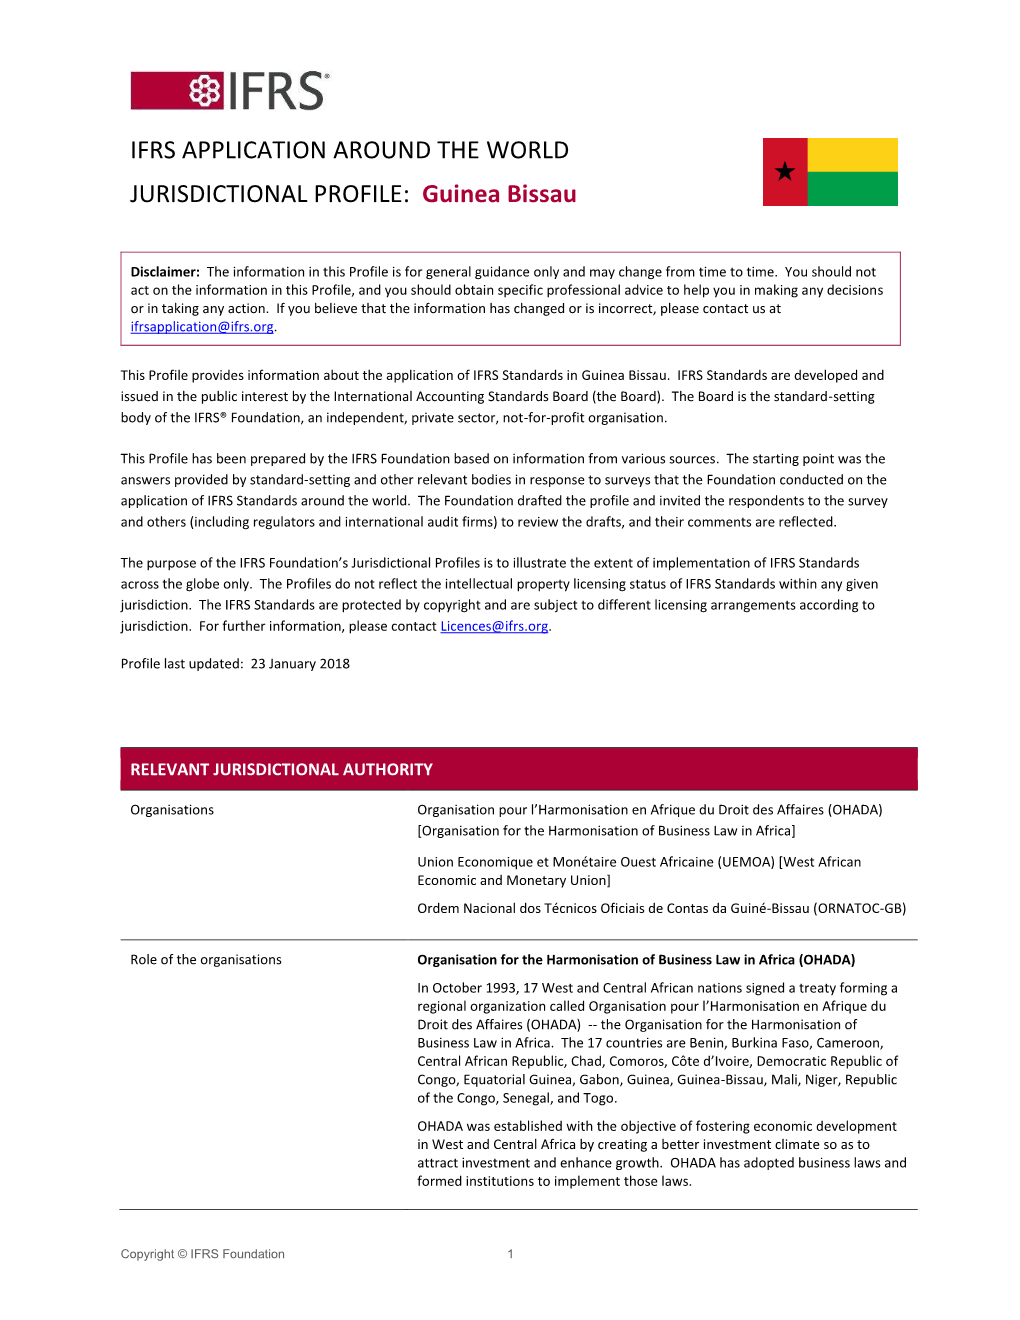 Guinea Bissau IFRS Profile